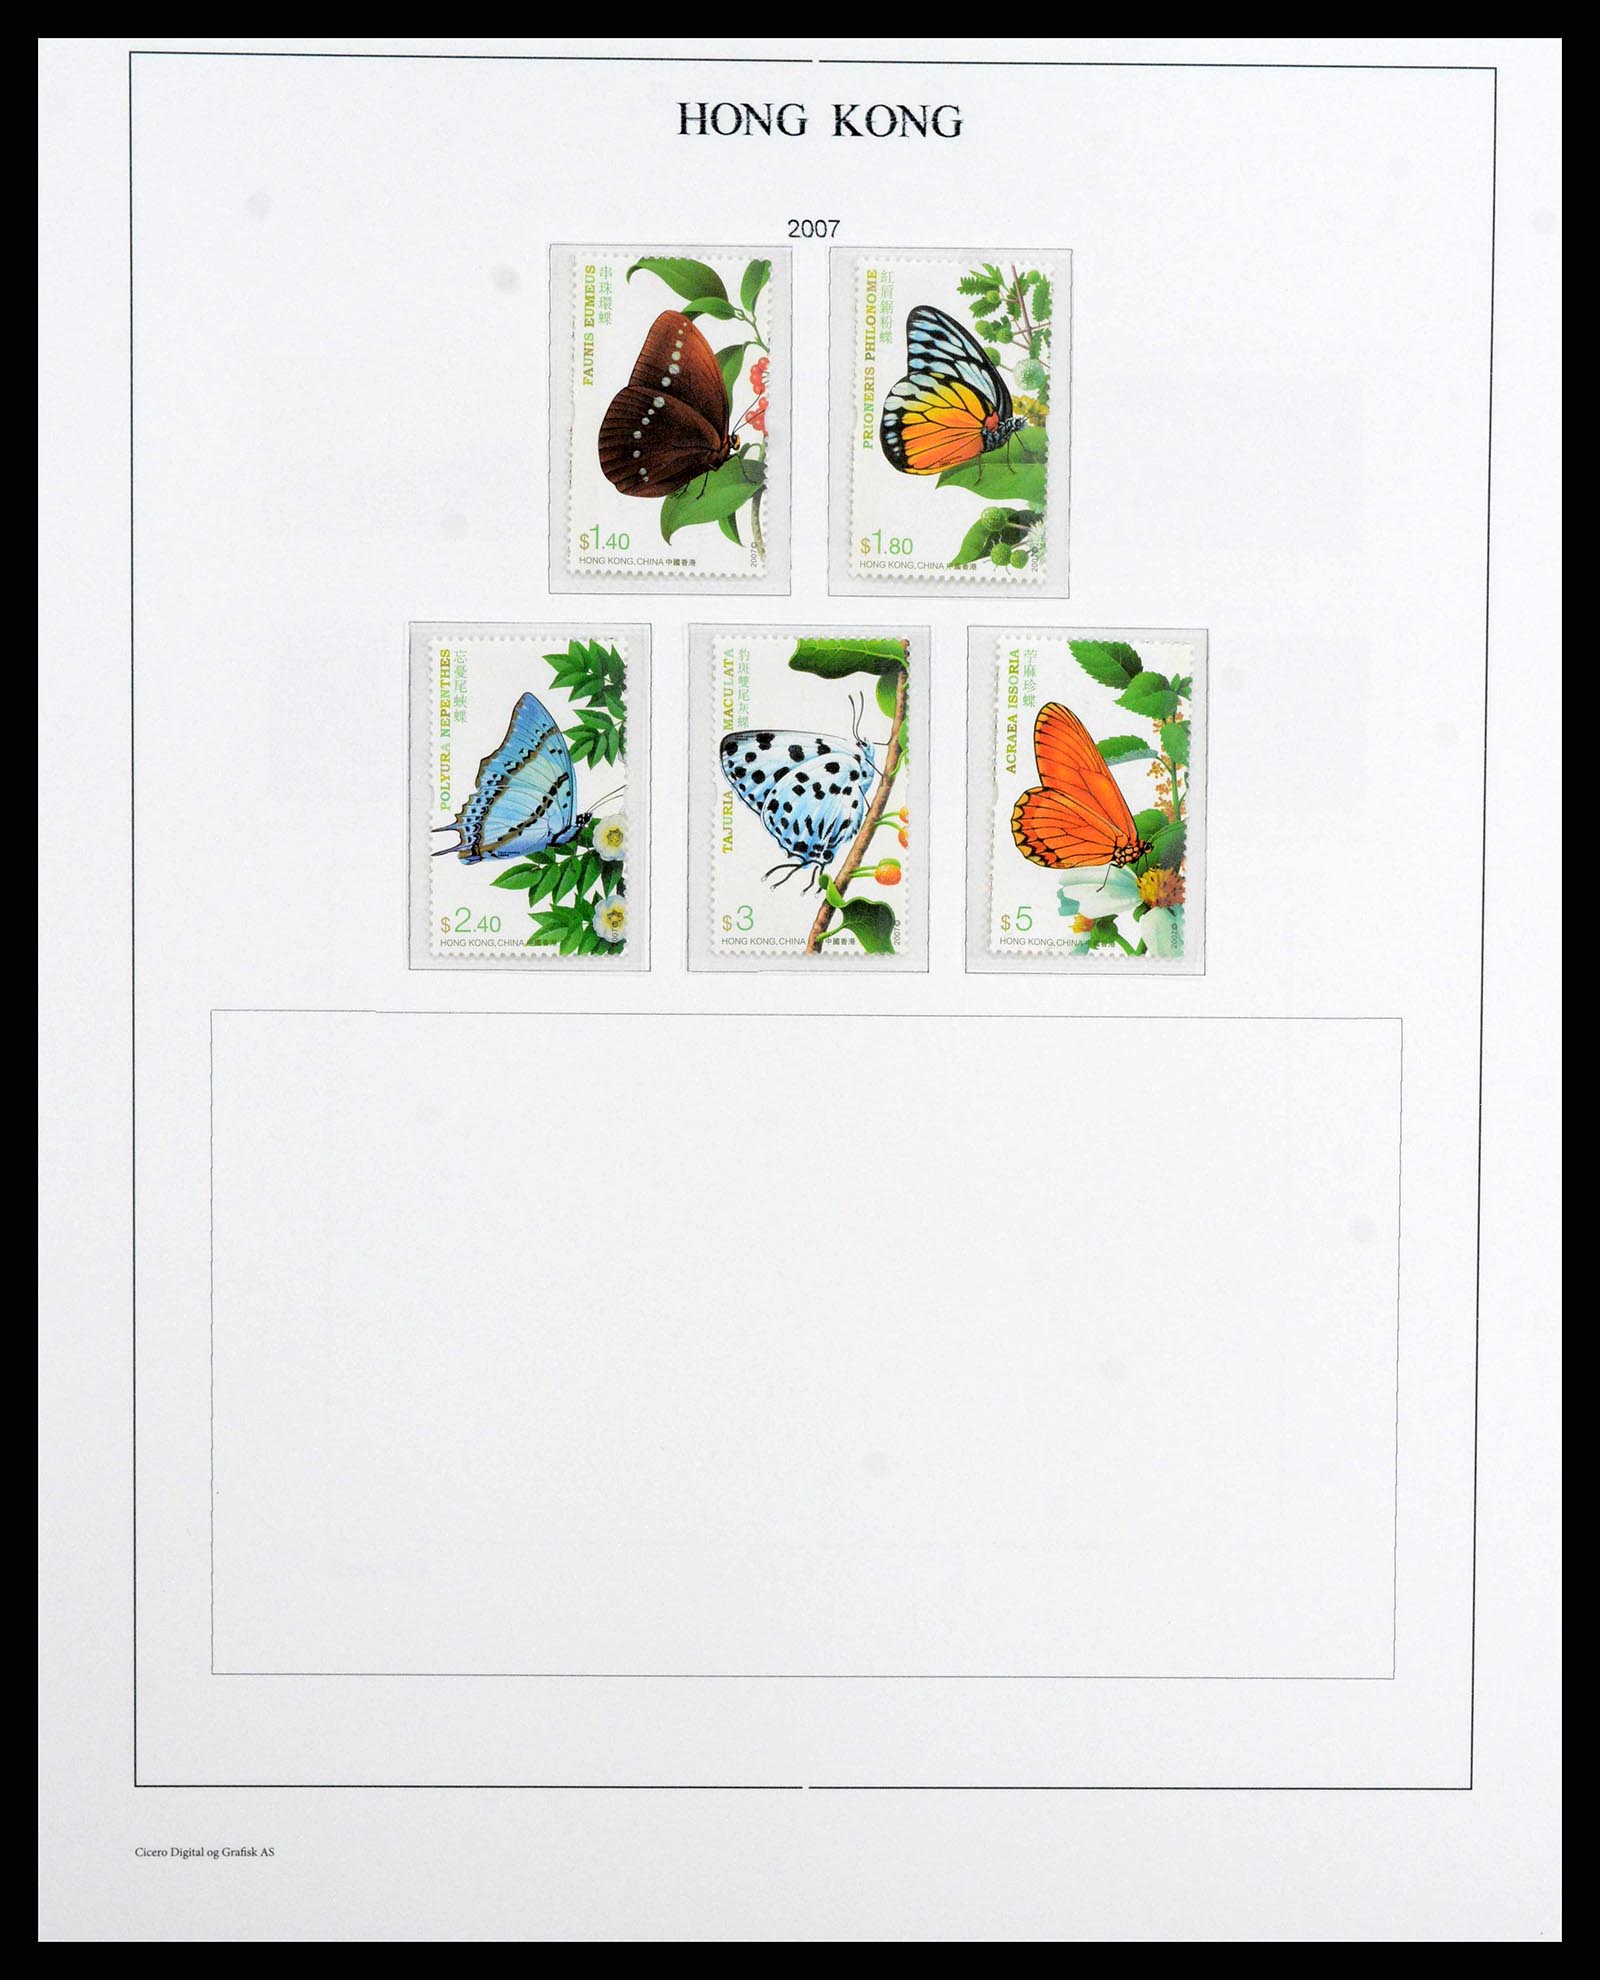 37955 0270 - Stamp collection 37955 Hong Kong supercollection 1862-2007.